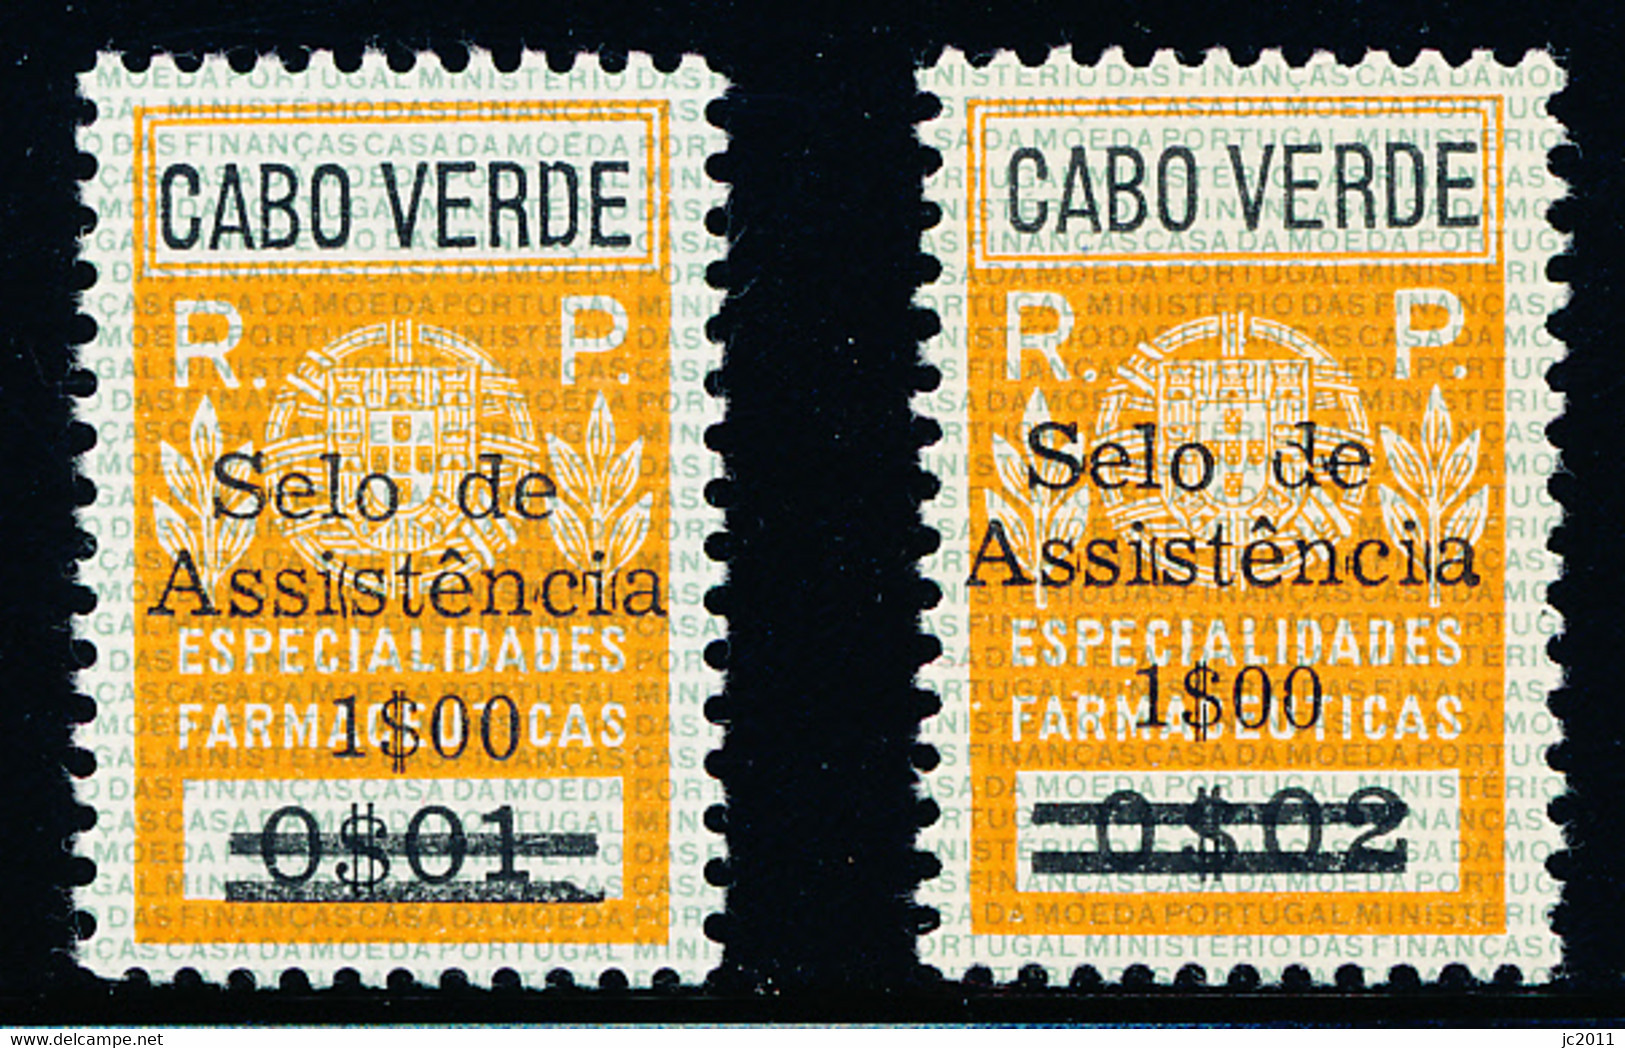 Cabo Verde - 1967 - Charaty Tax / Especialidades Farmacêuticas - MNH - Cape Verde